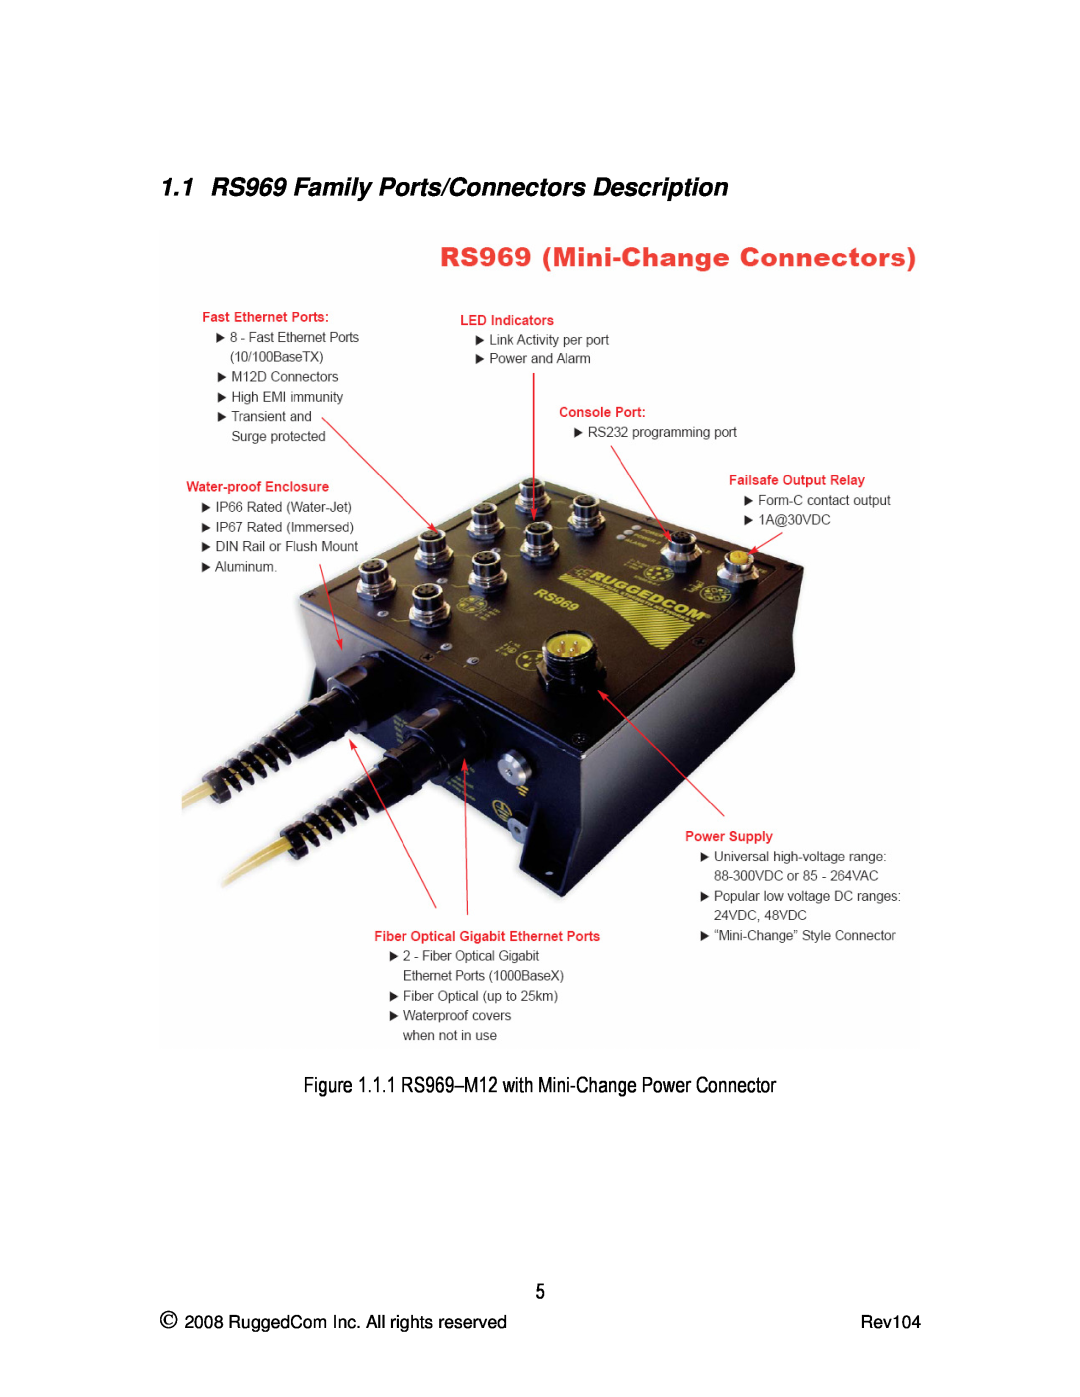 RuggedCom manual 1.1 RS969 Family Ports/Connectors Description, 1.1 RS969-M12 with Mini-Change Power Connector 